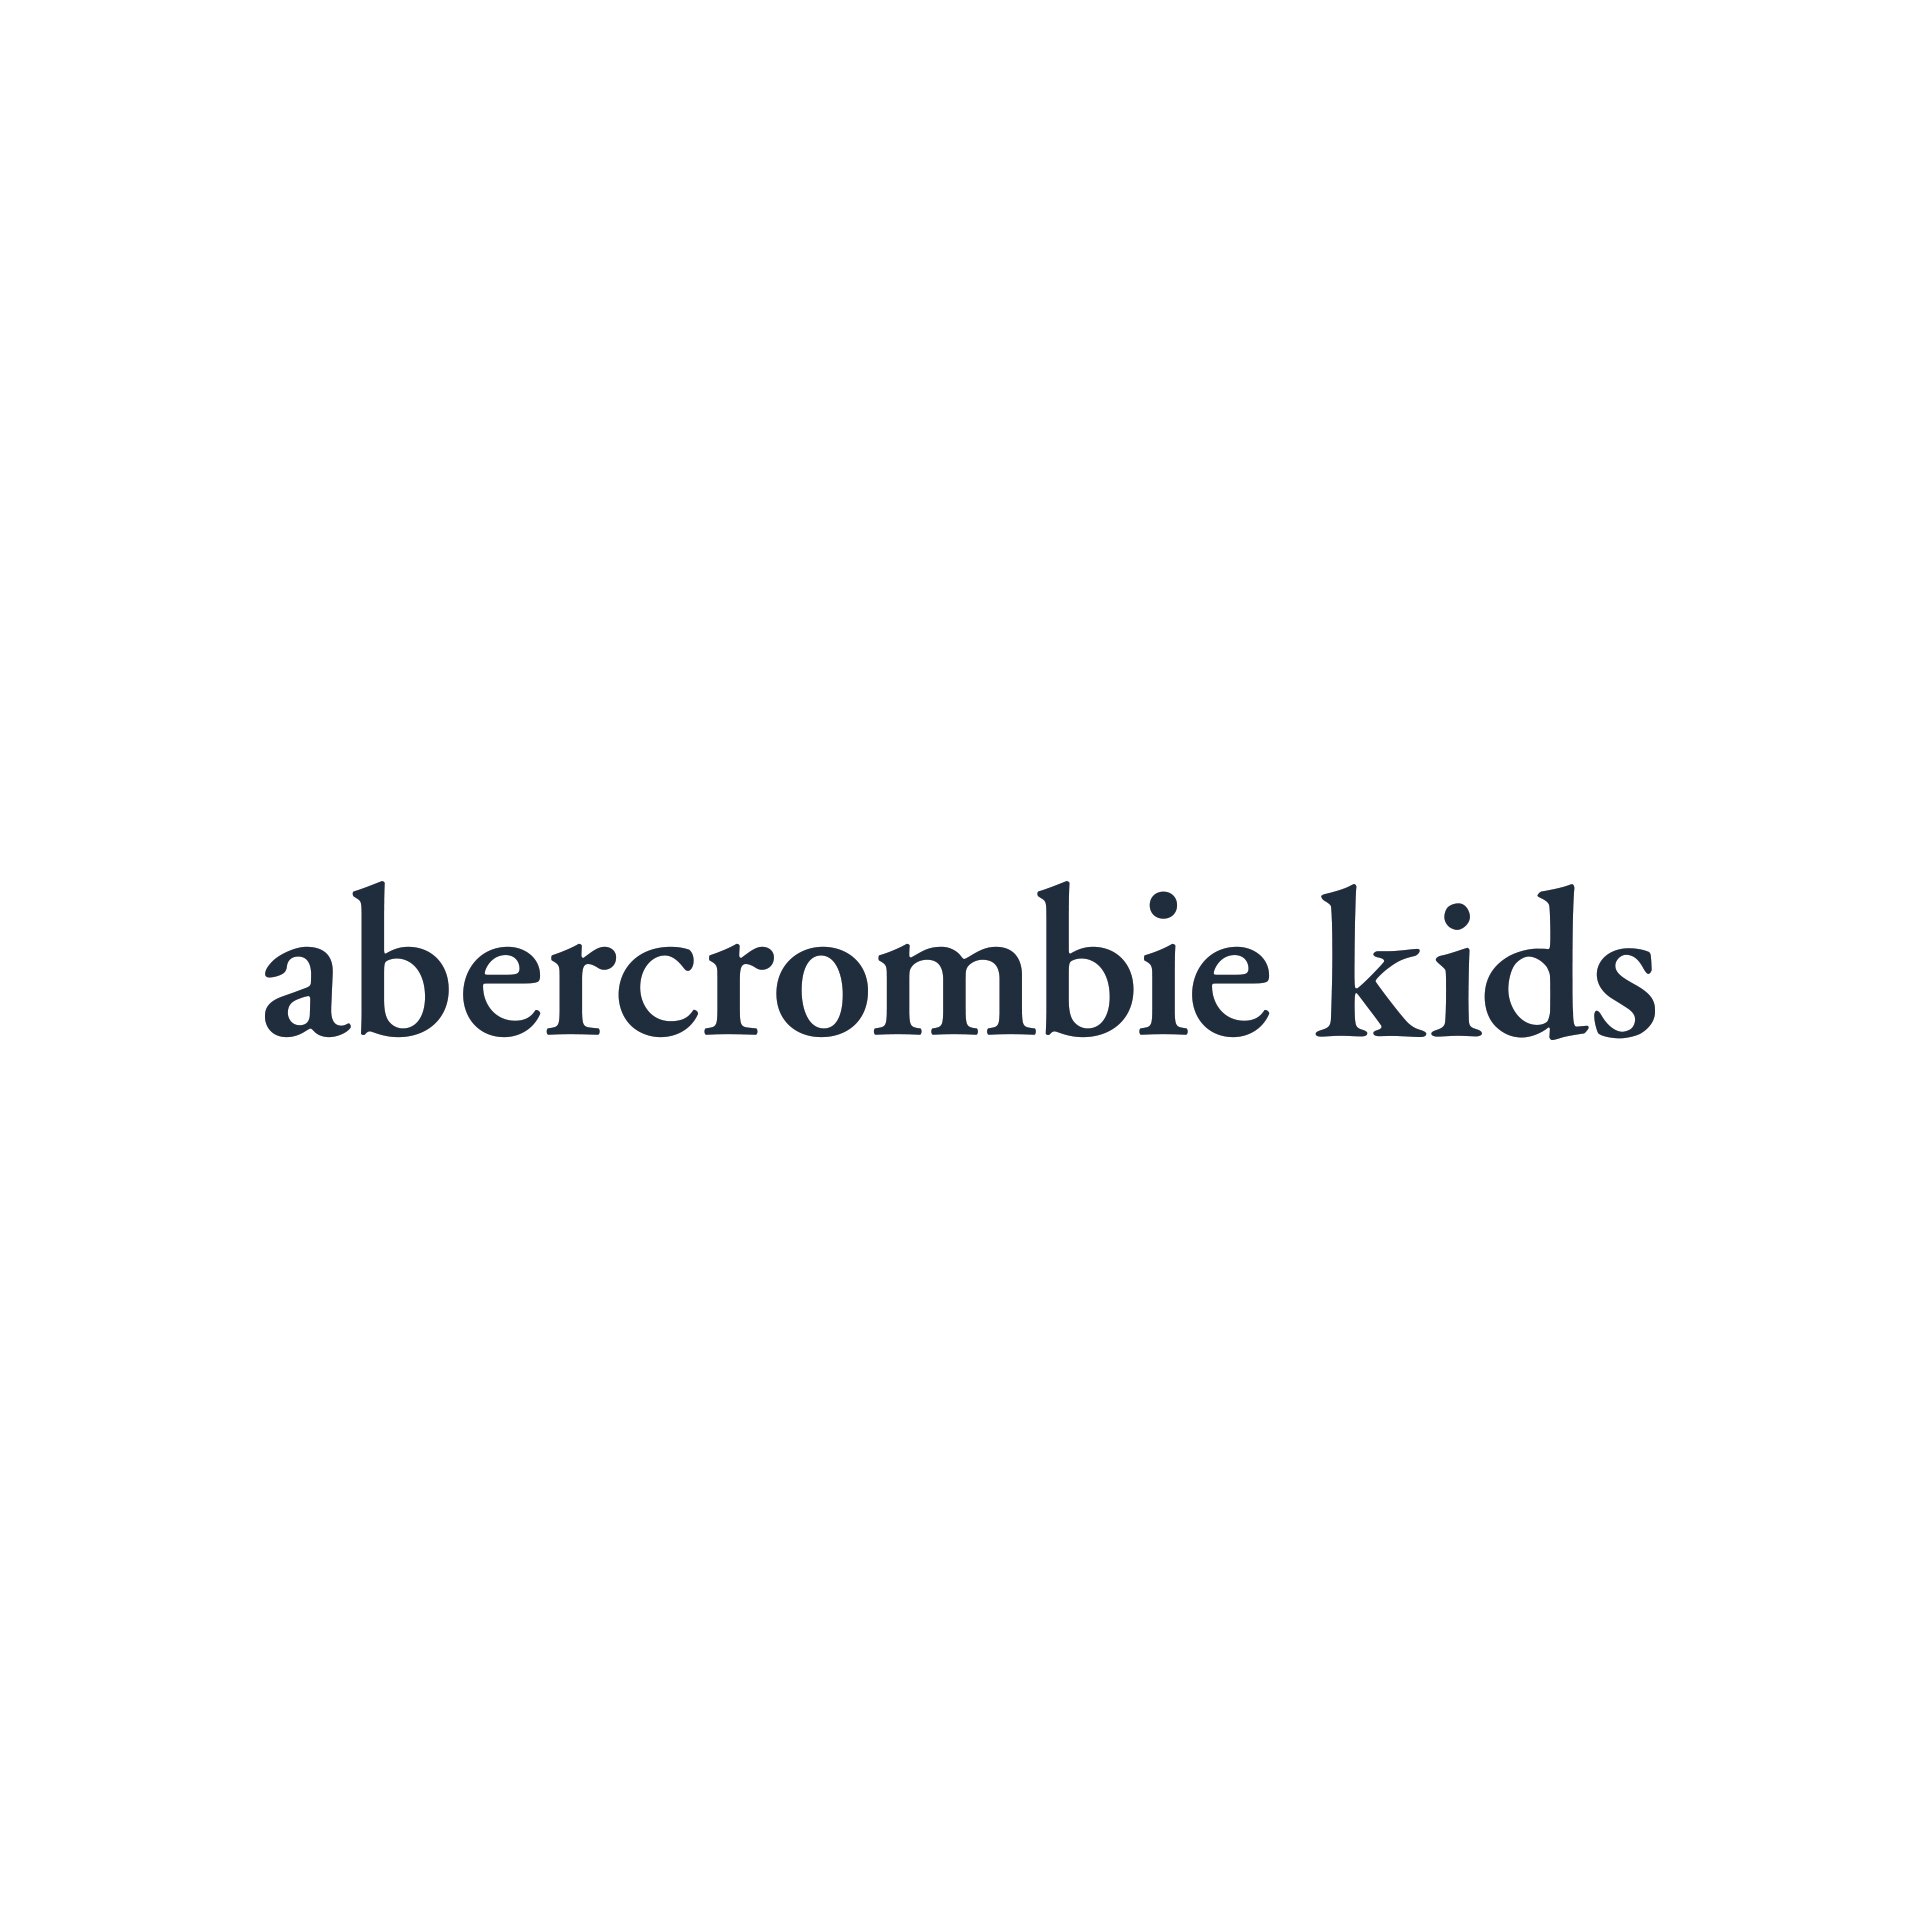 nearest abercrombie kids